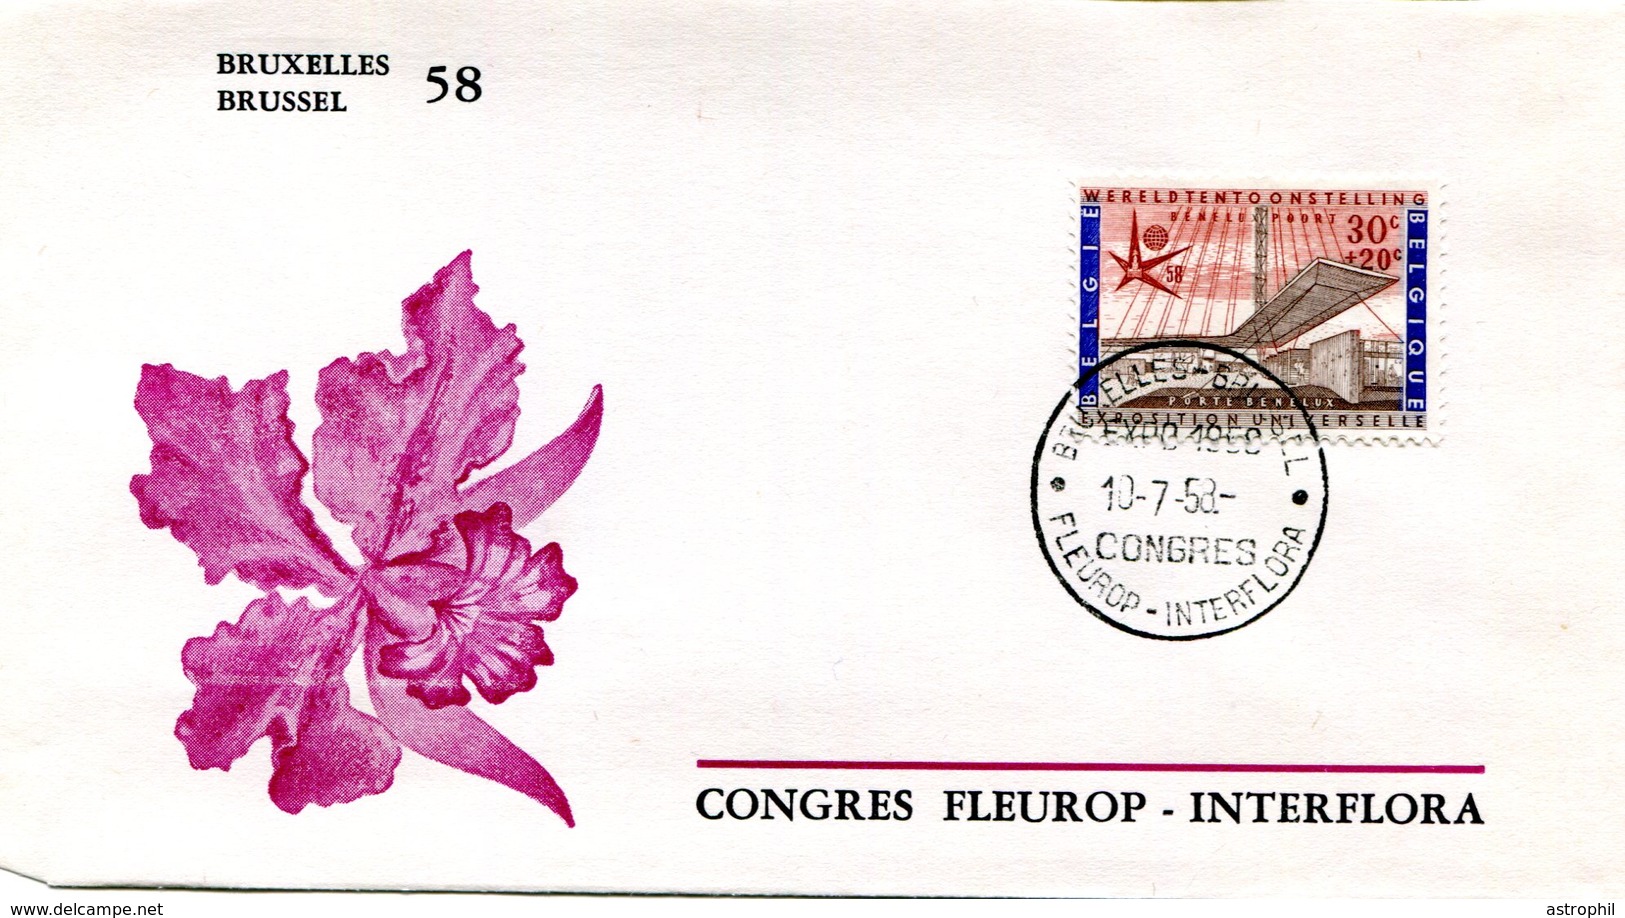 14158139 BE 19580710 Bx Expo58; Congrès Fleurop Interflora; Pli - 1958 – Brussels (Belgium)